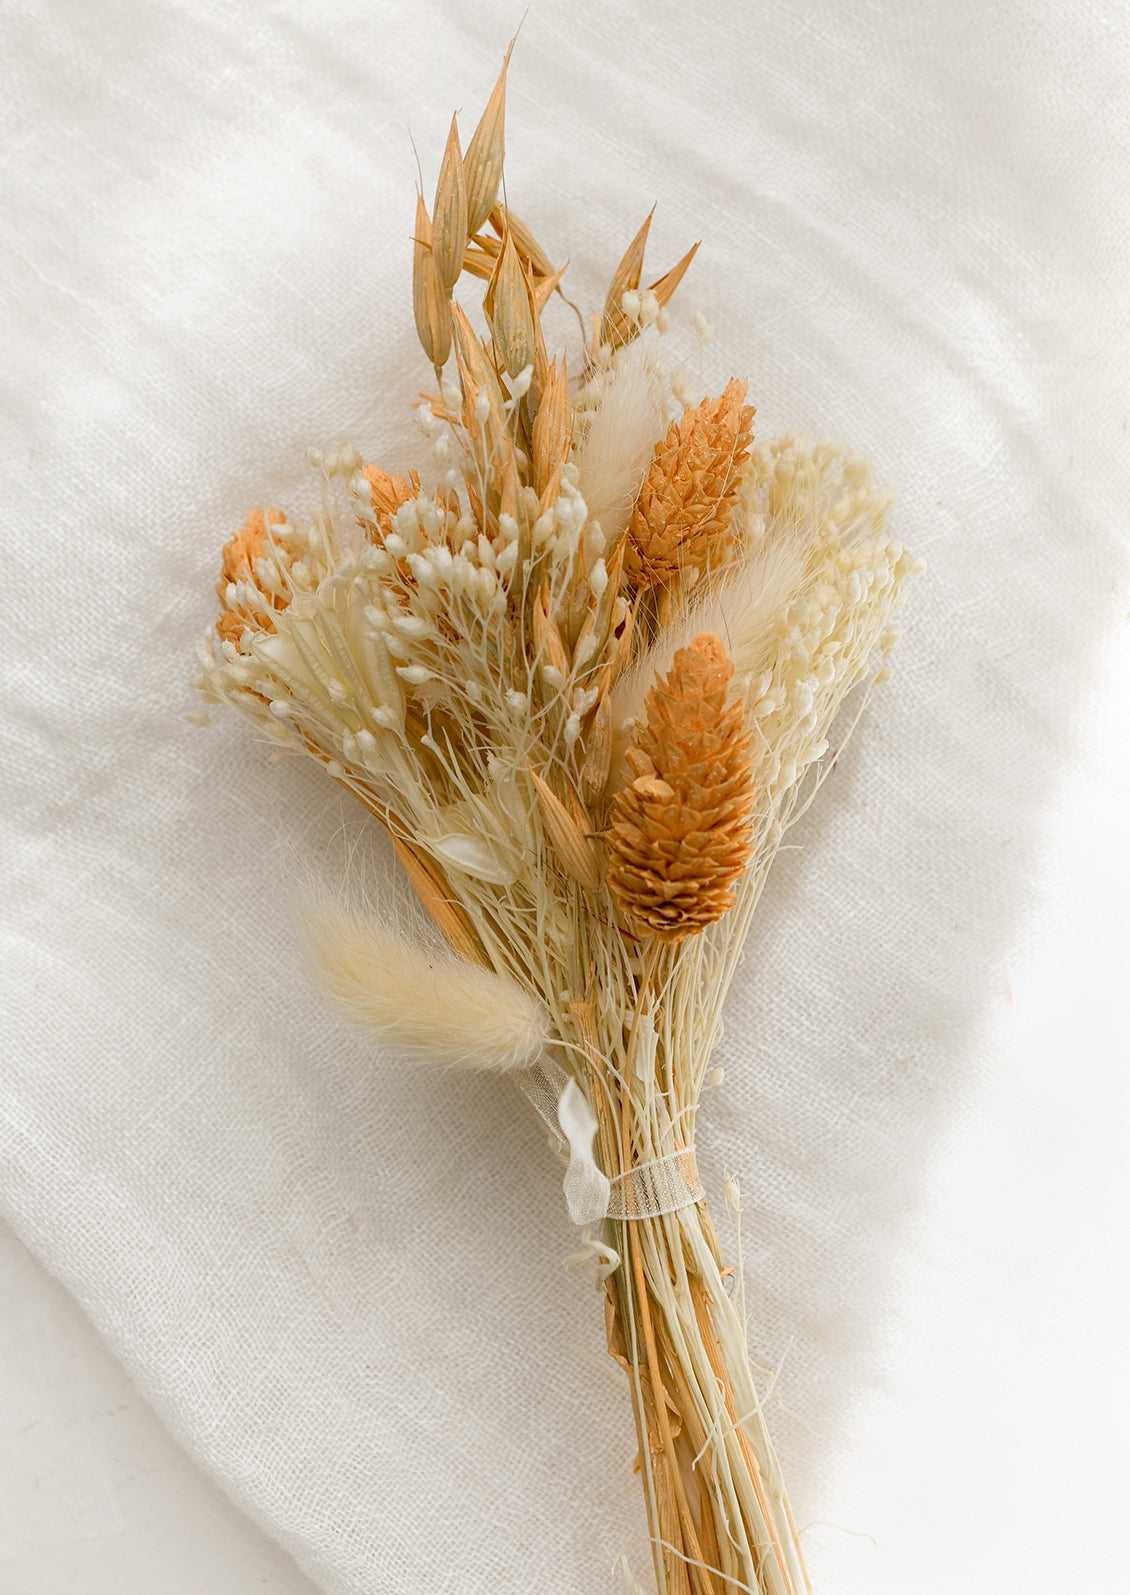 Mini Dried Flower Bouquet - Natural